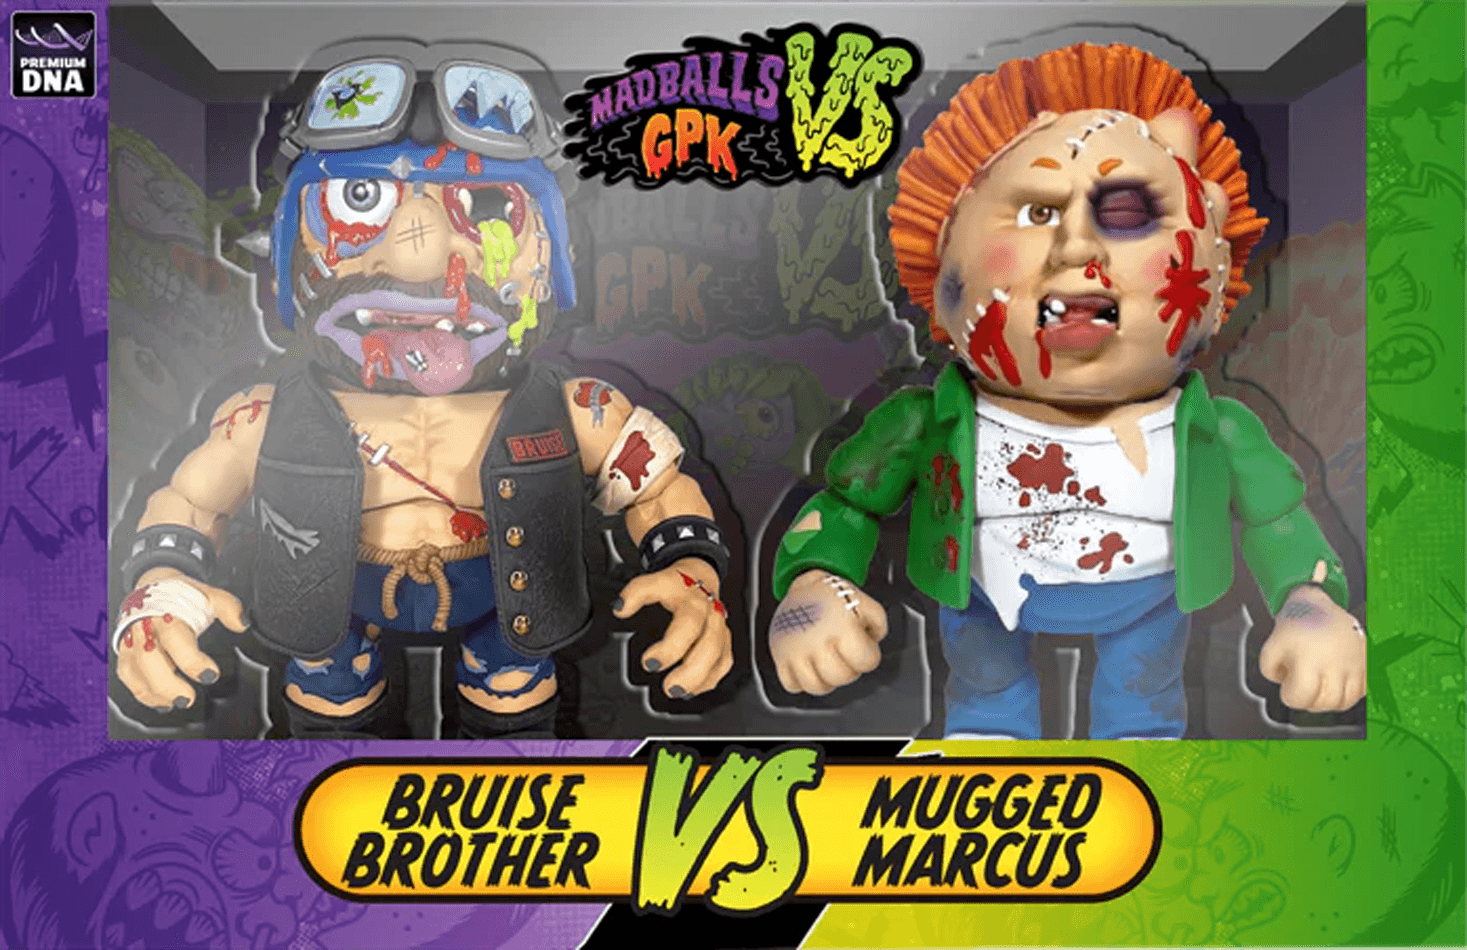 DNAPDNAMBVGPKMMVBB Madballs vs GPK - Mugged Marcus vs Bruise Brother Action Figure Set - Premium DNA Toys - Titan Pop Culture